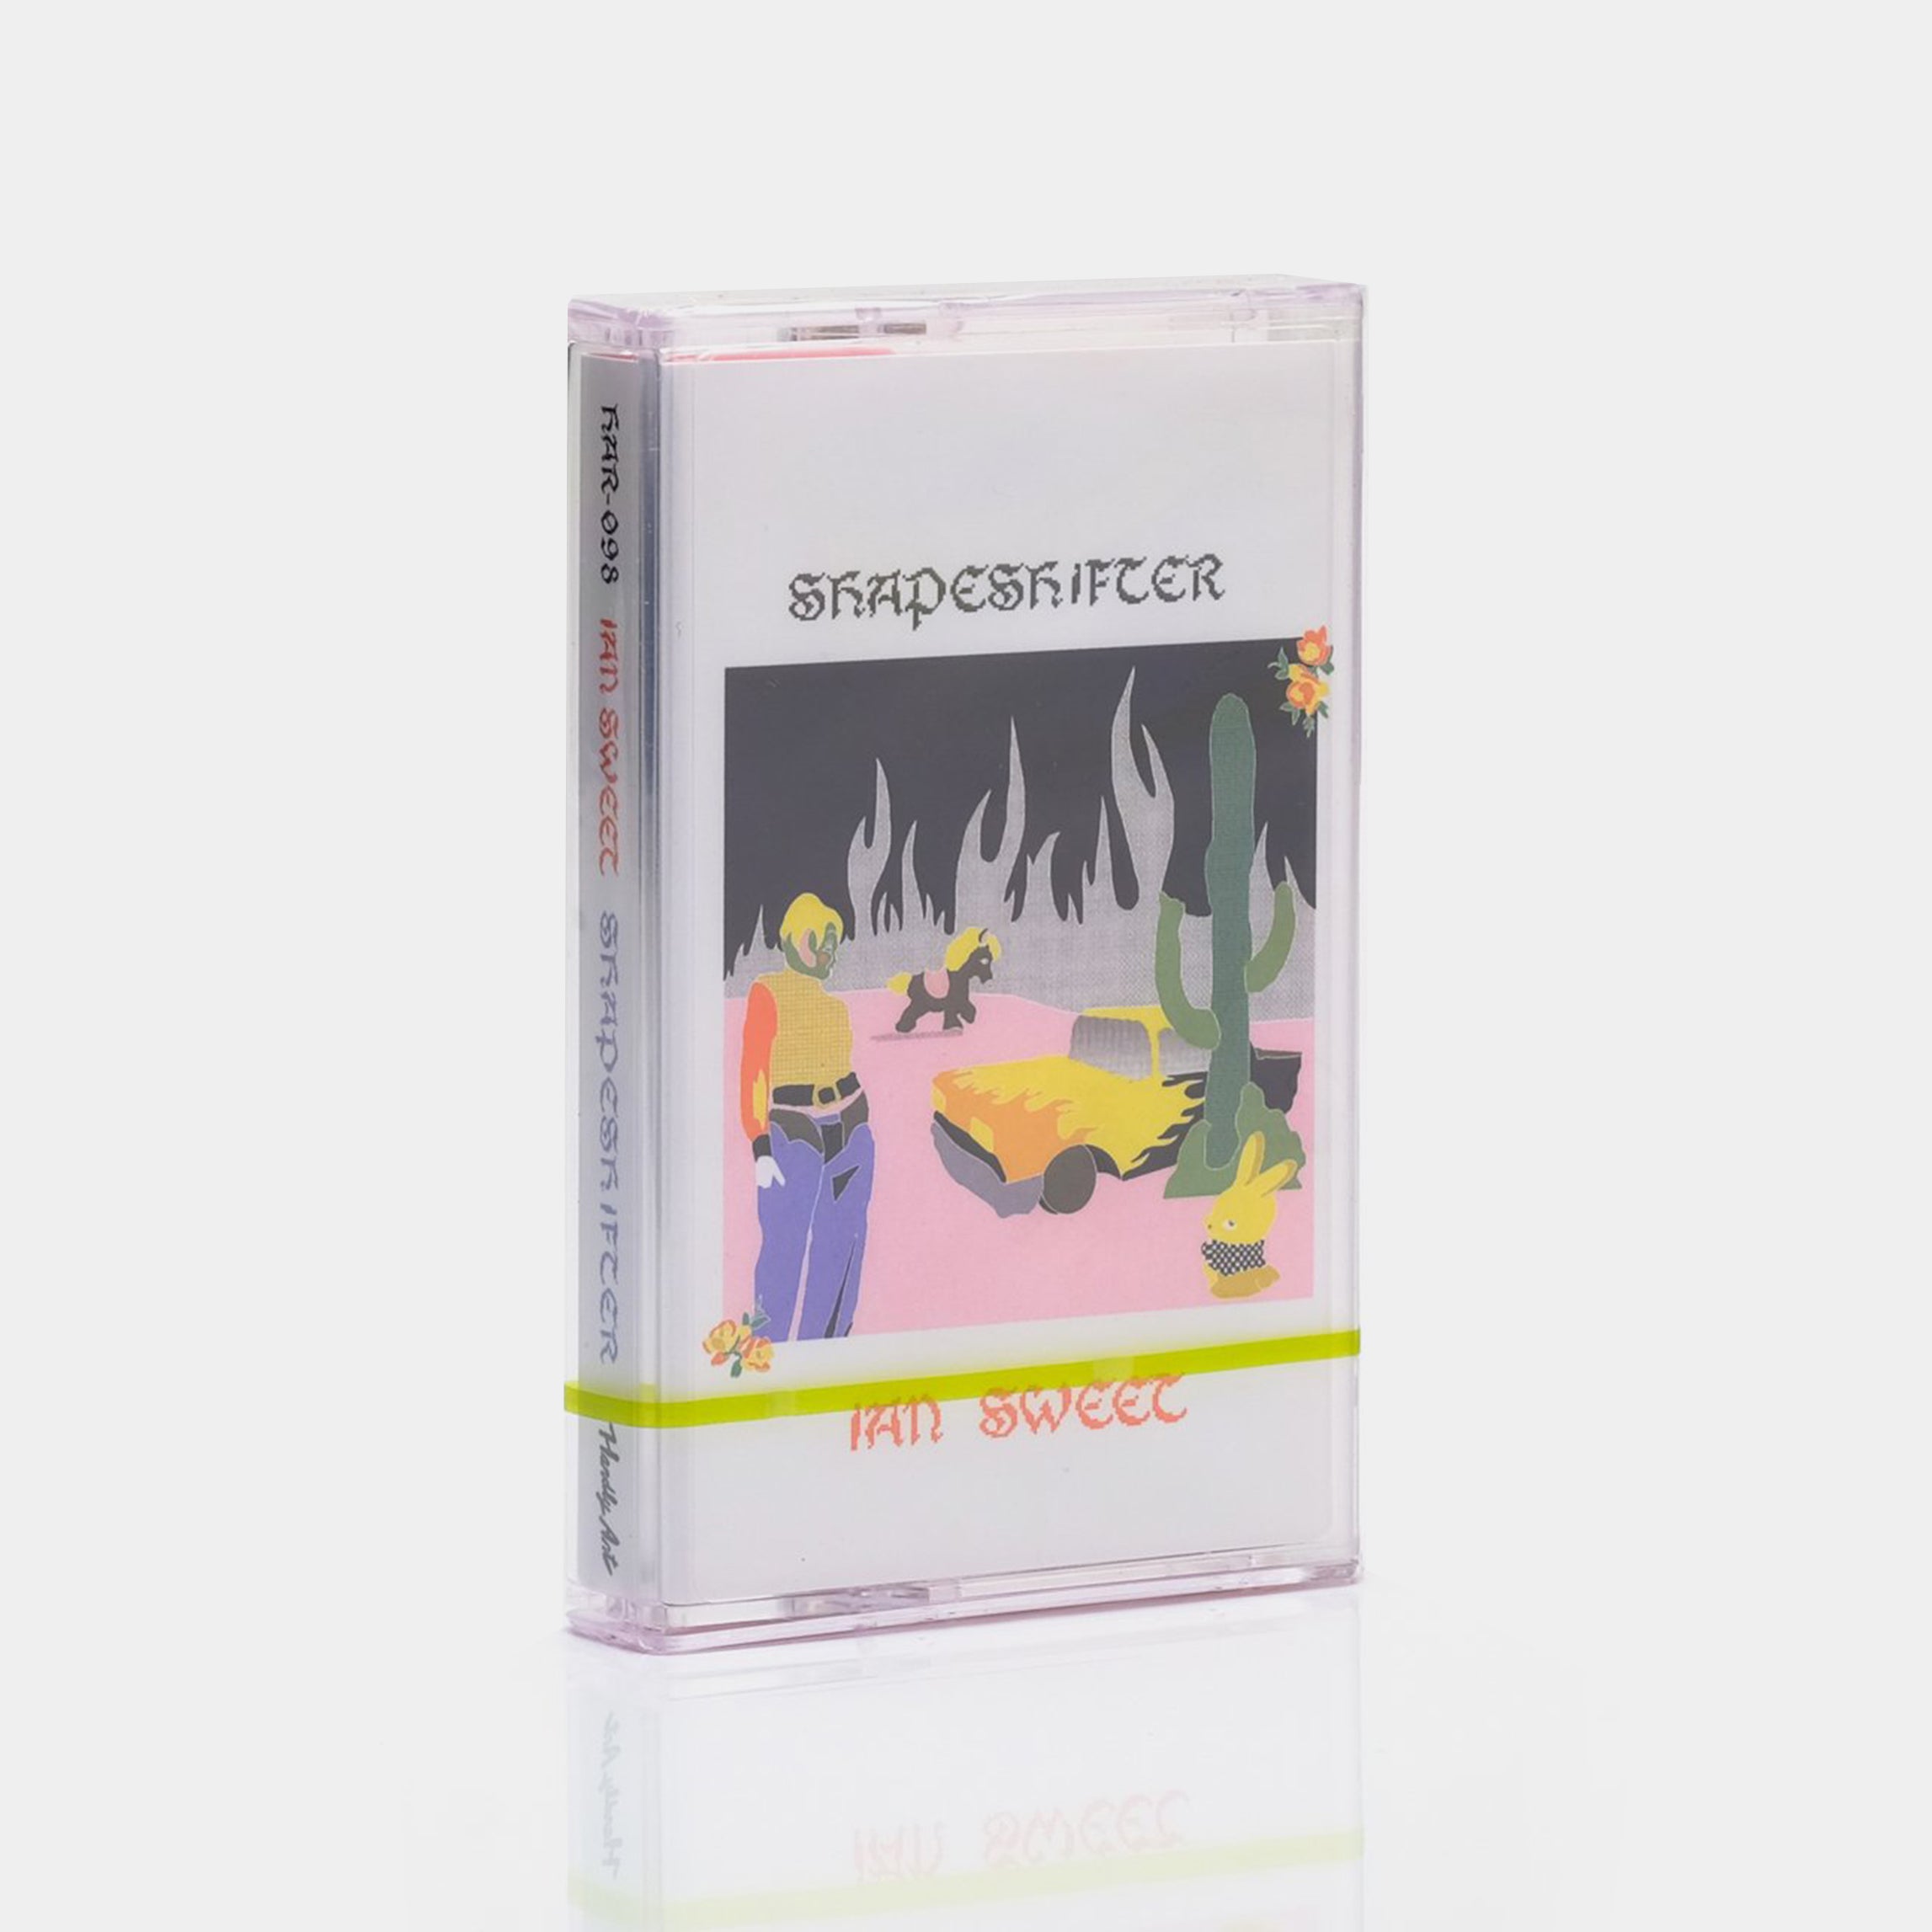 Ian Sweet - Shapeshifter Cassette Tape